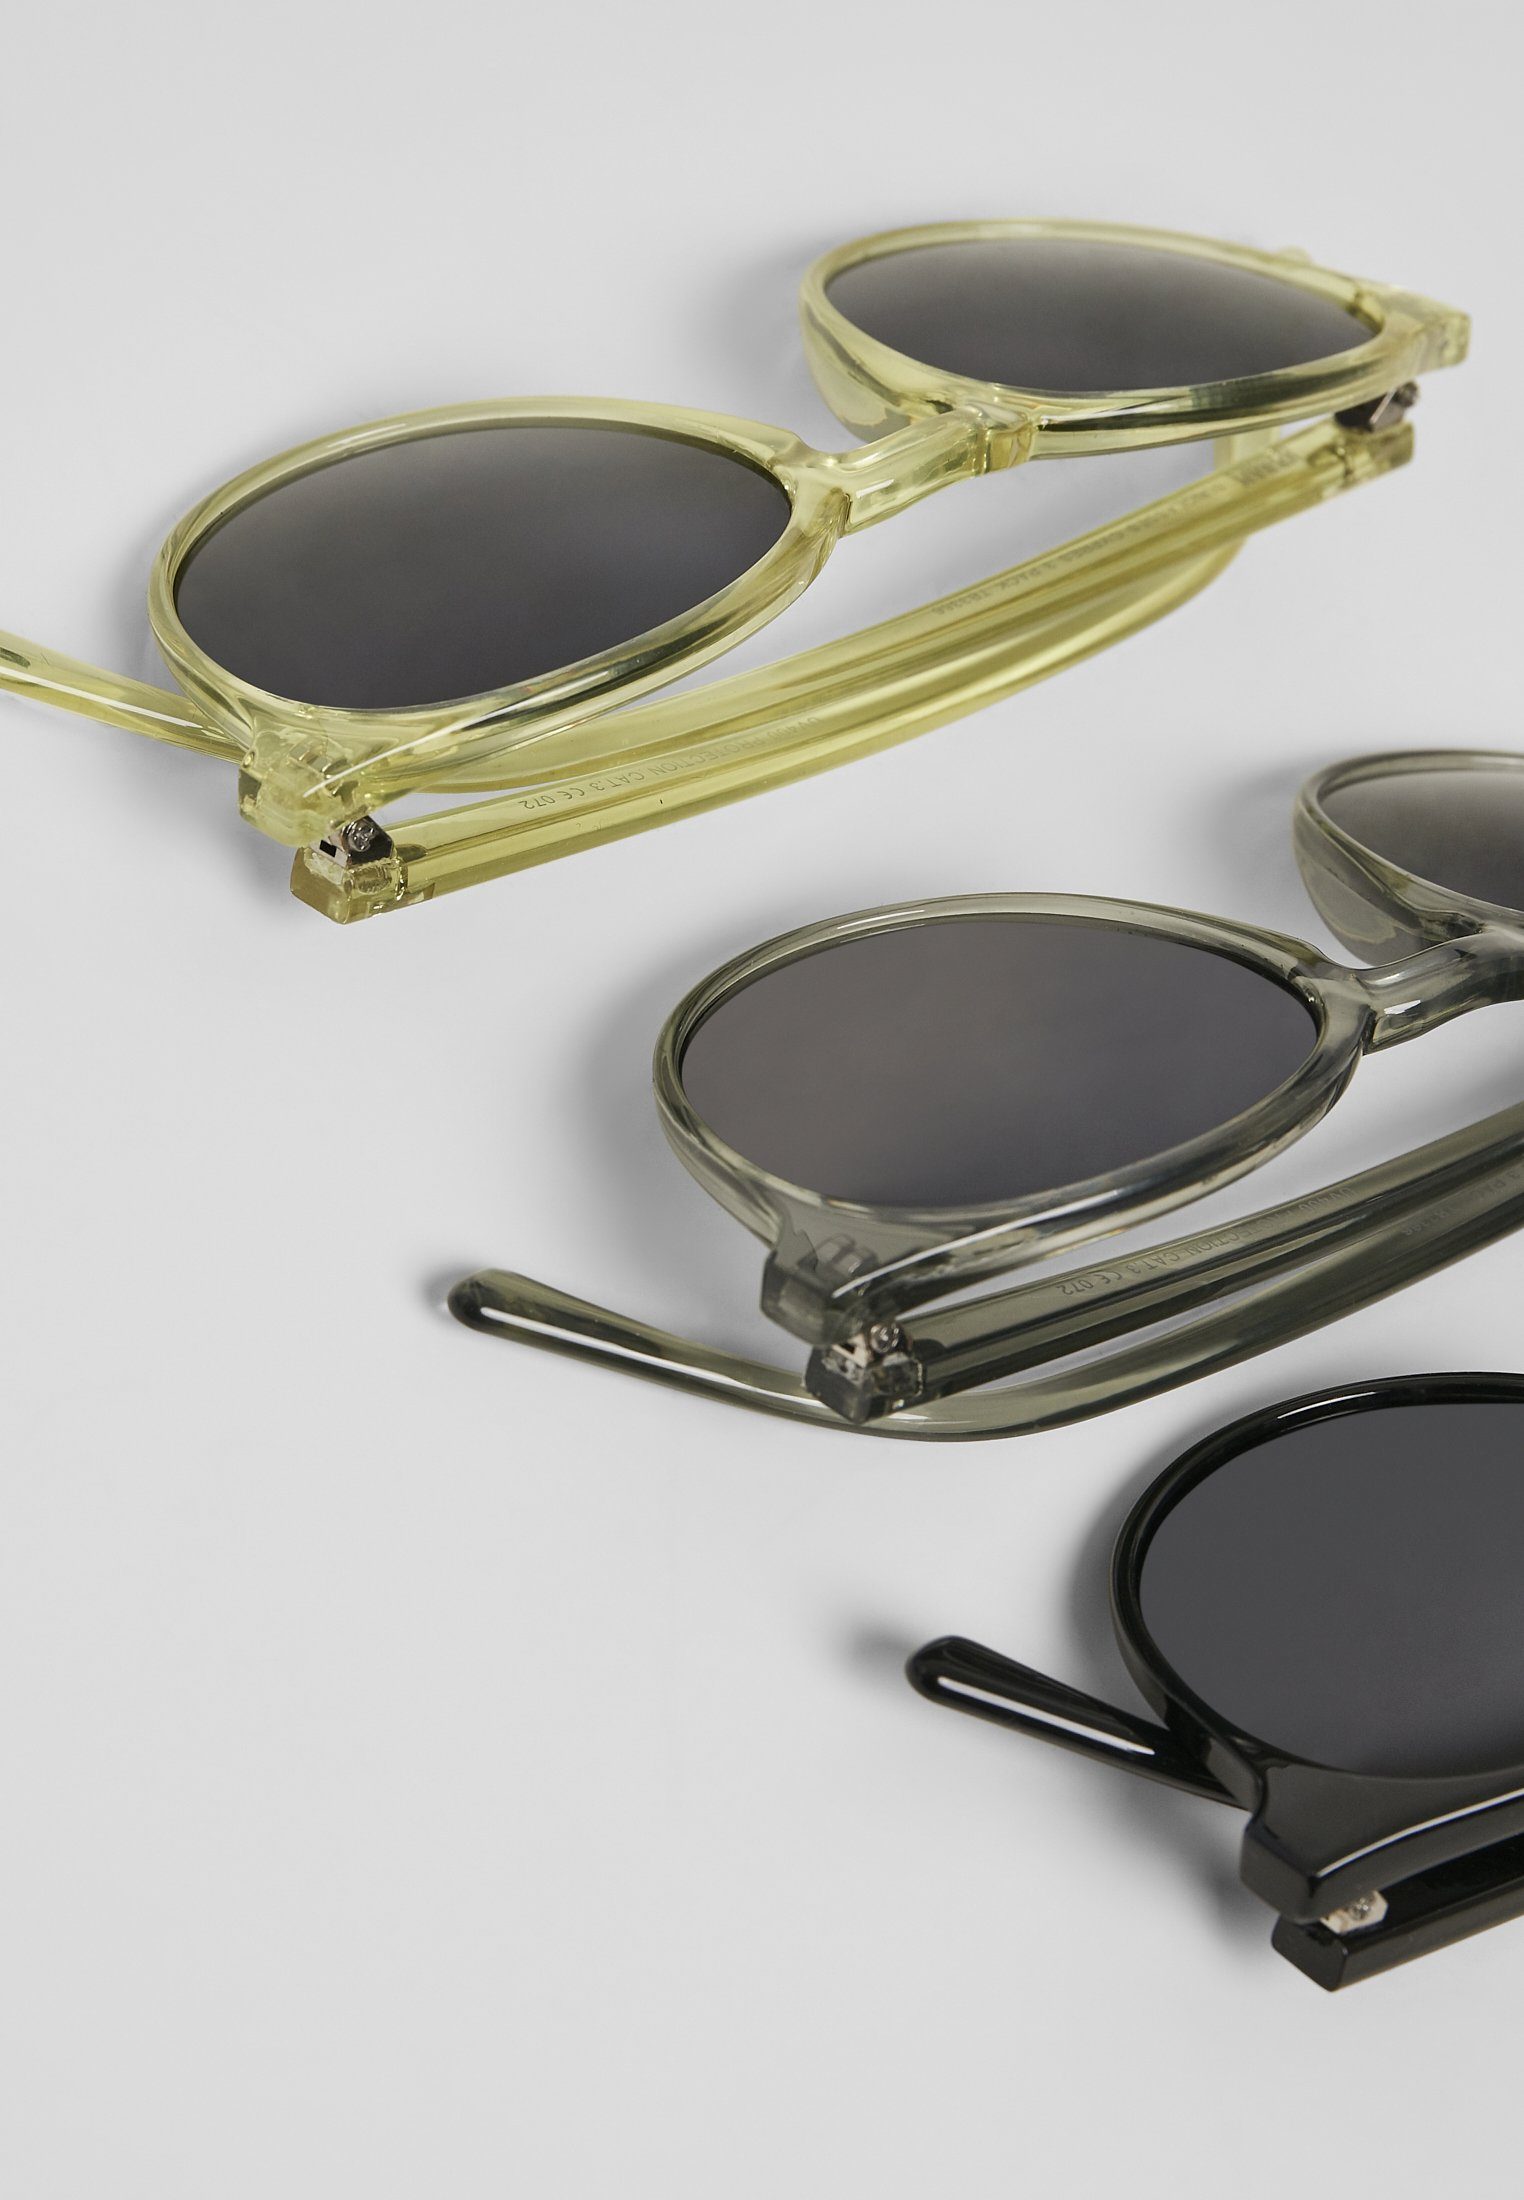 URBAN CLASSICS Sonnenbrille black/lightgrey/yellow 3-Pack Unisex Cypress Sunglasses